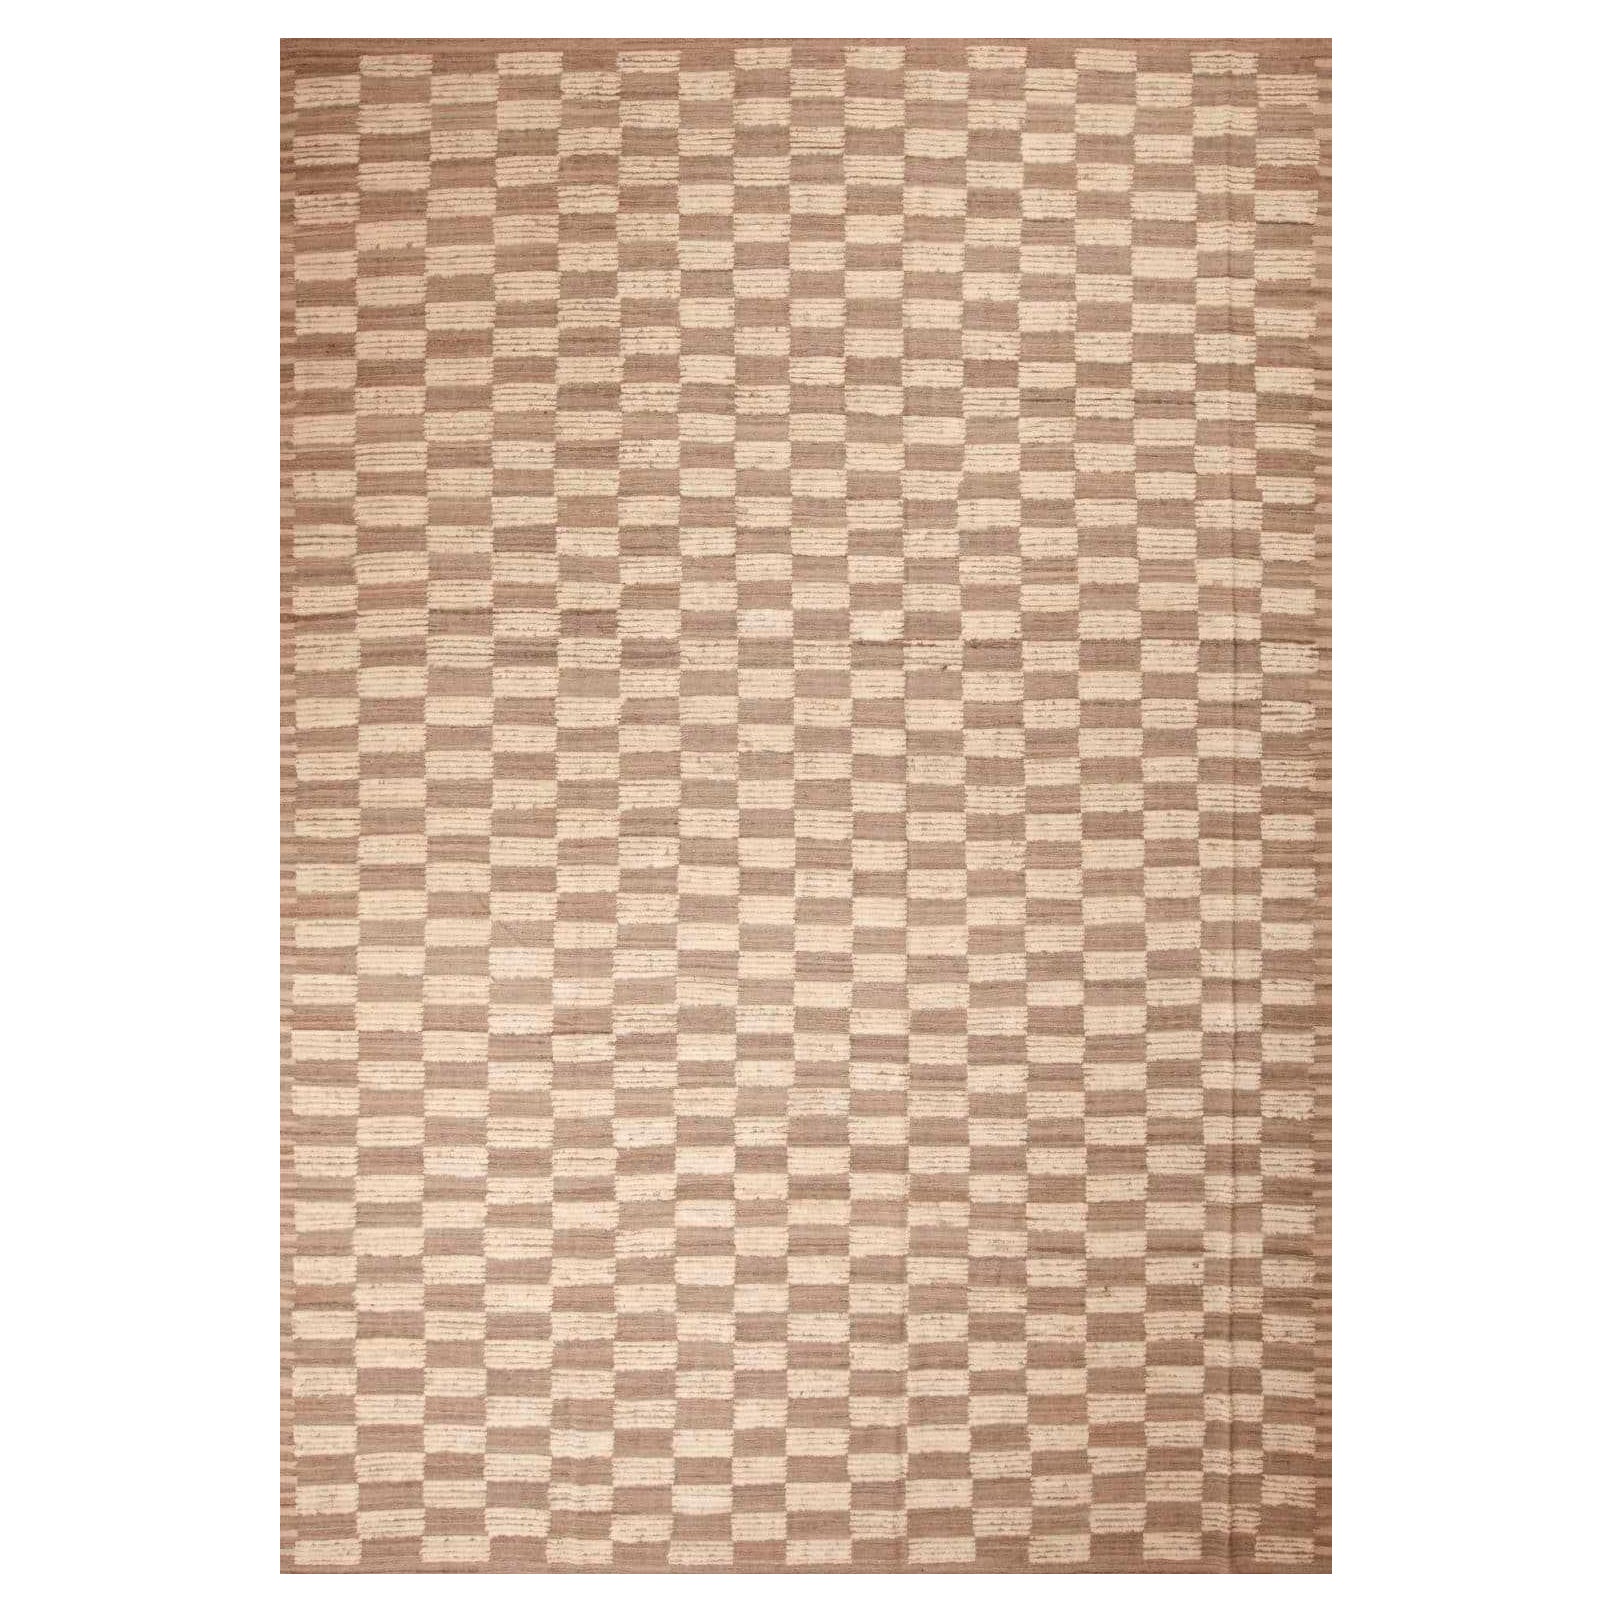 Nazmiyal Collection Geometric Checkerboard Pattern Modern Area Rug 10'5" x 14'9"